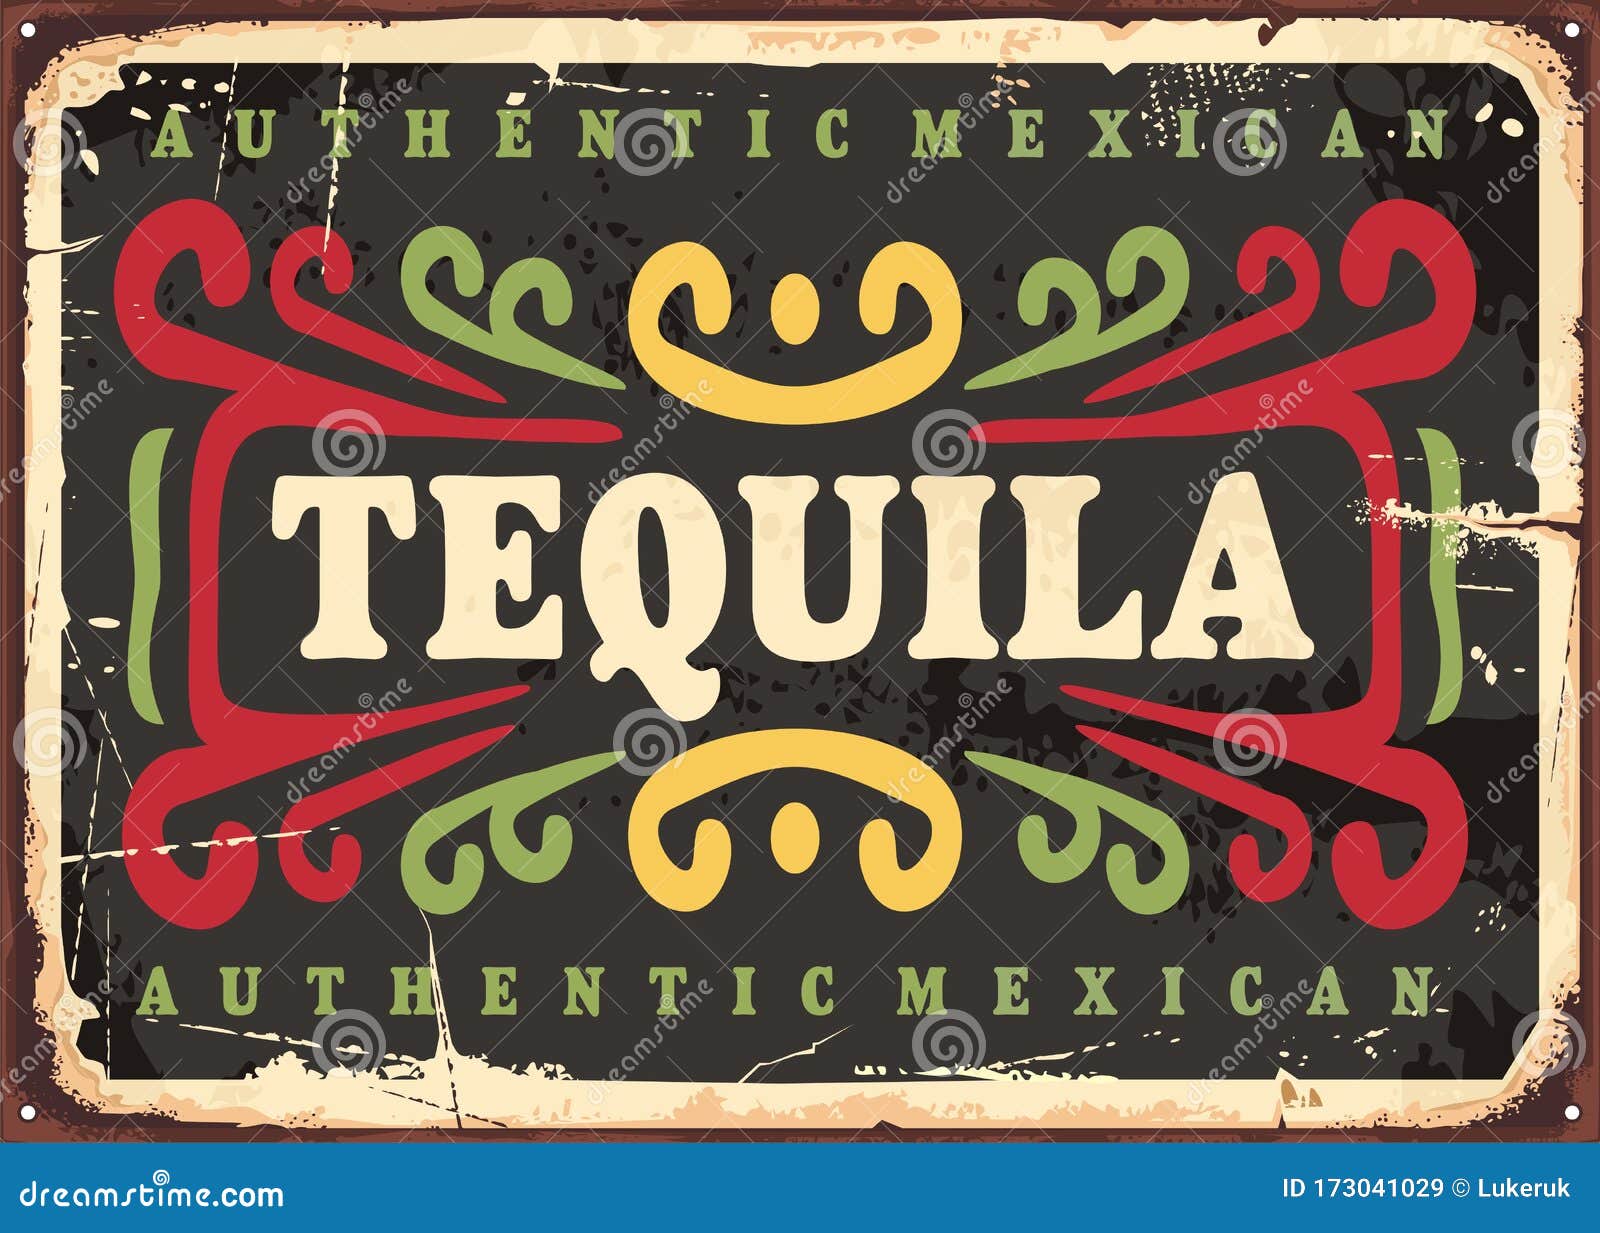 tequila vintage sign